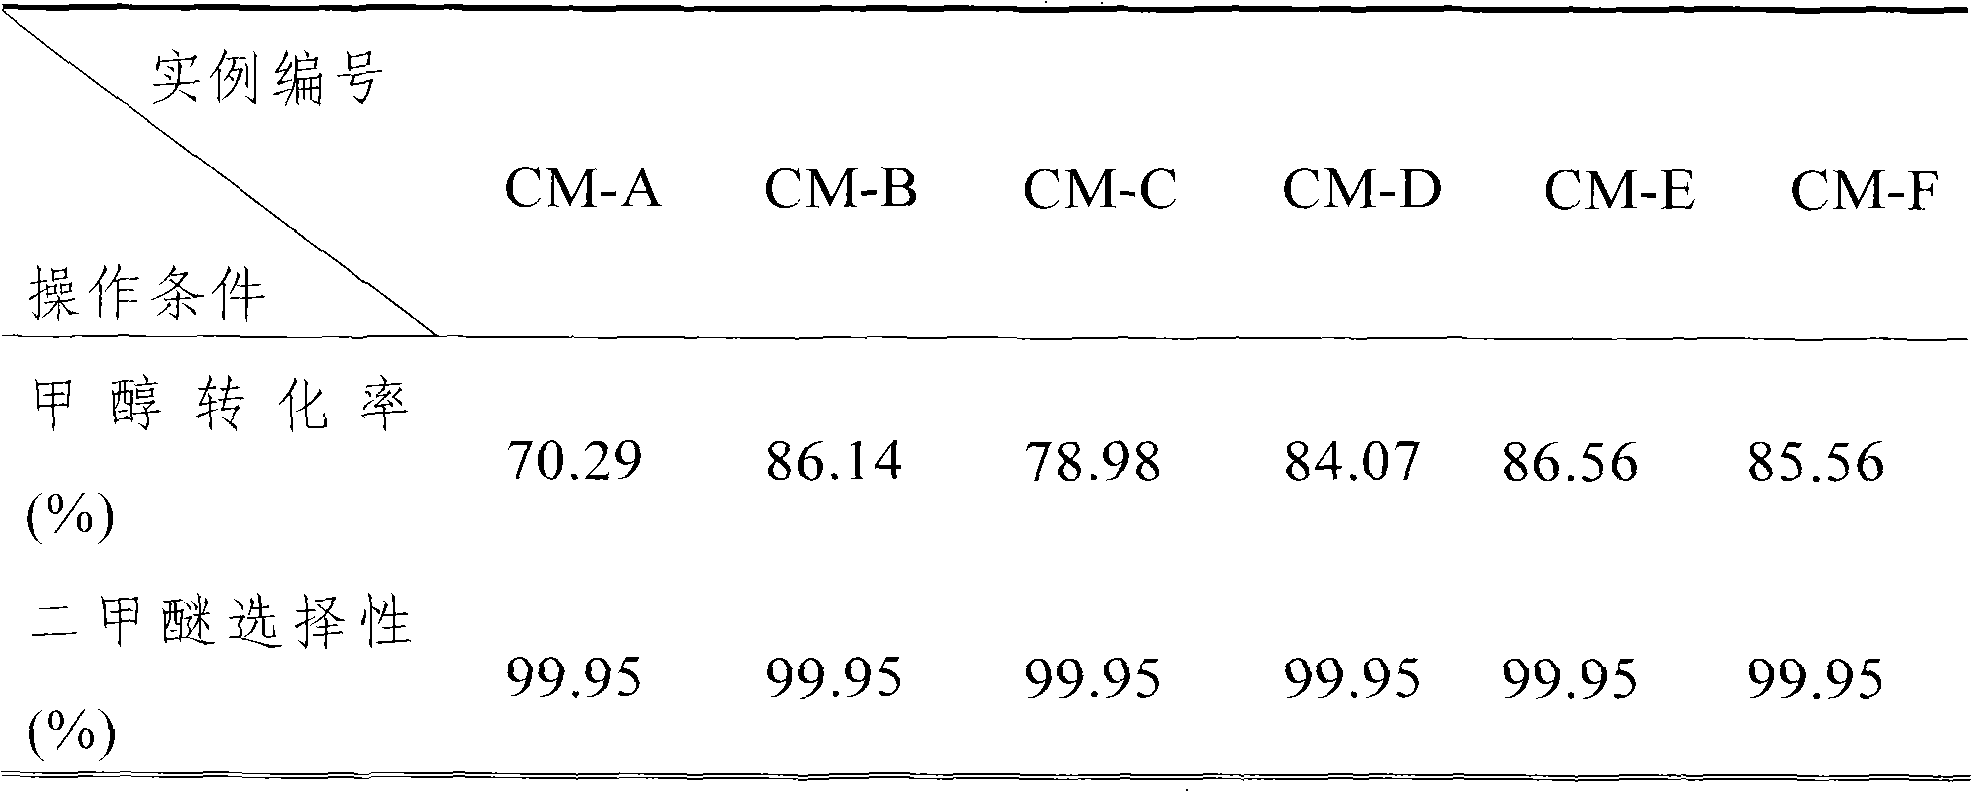 Preparation method of catalyst in preparation of dimethyl ether by methyl alcohol